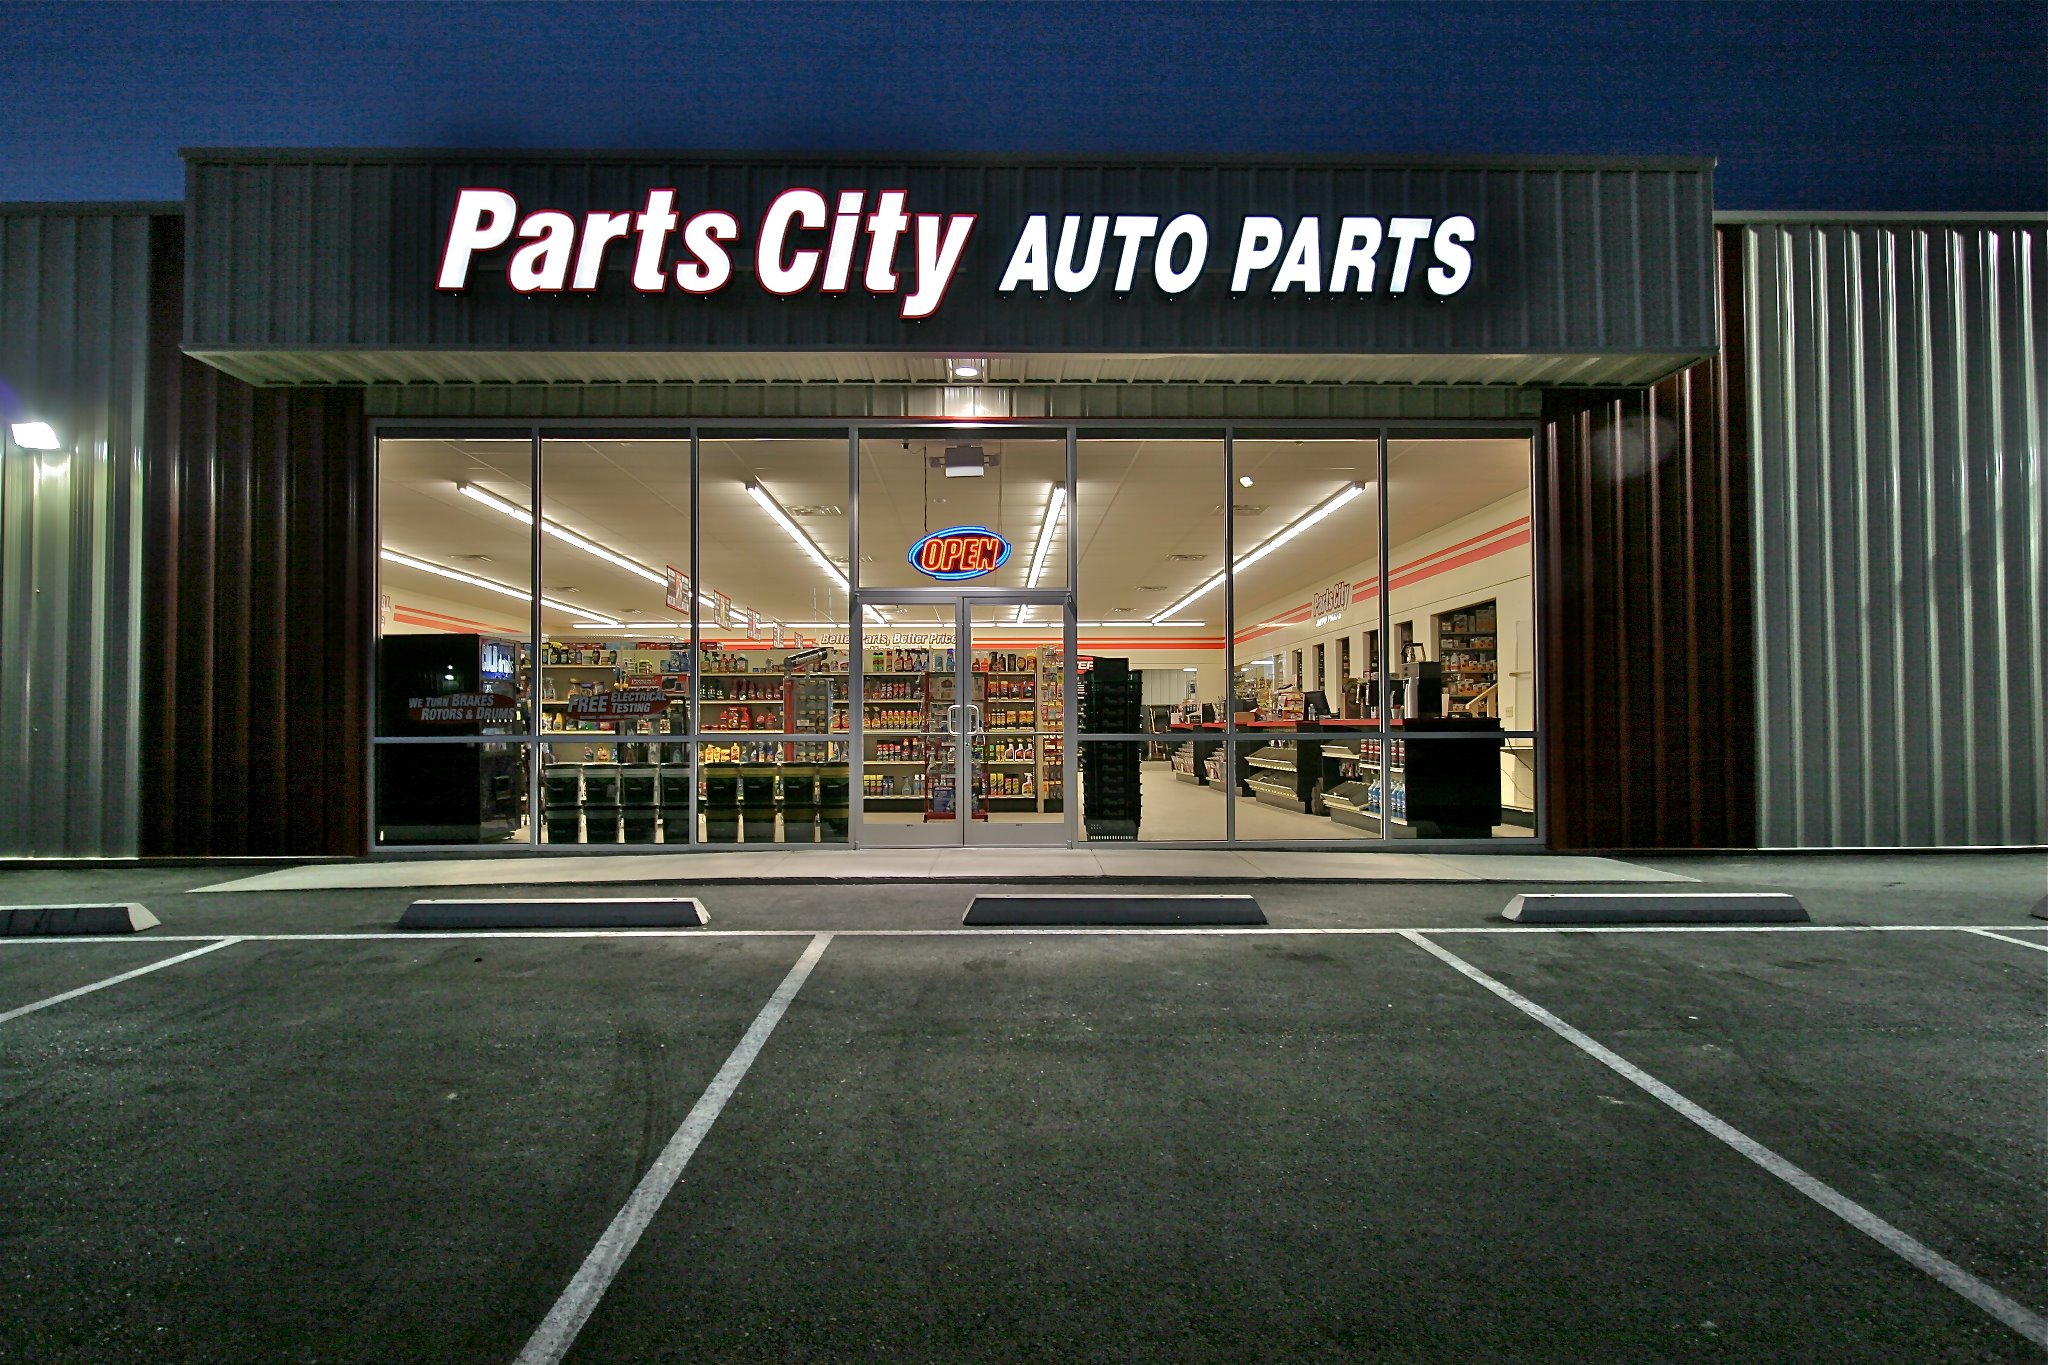 Parts City Auto Parts - Hart County Auto Parts